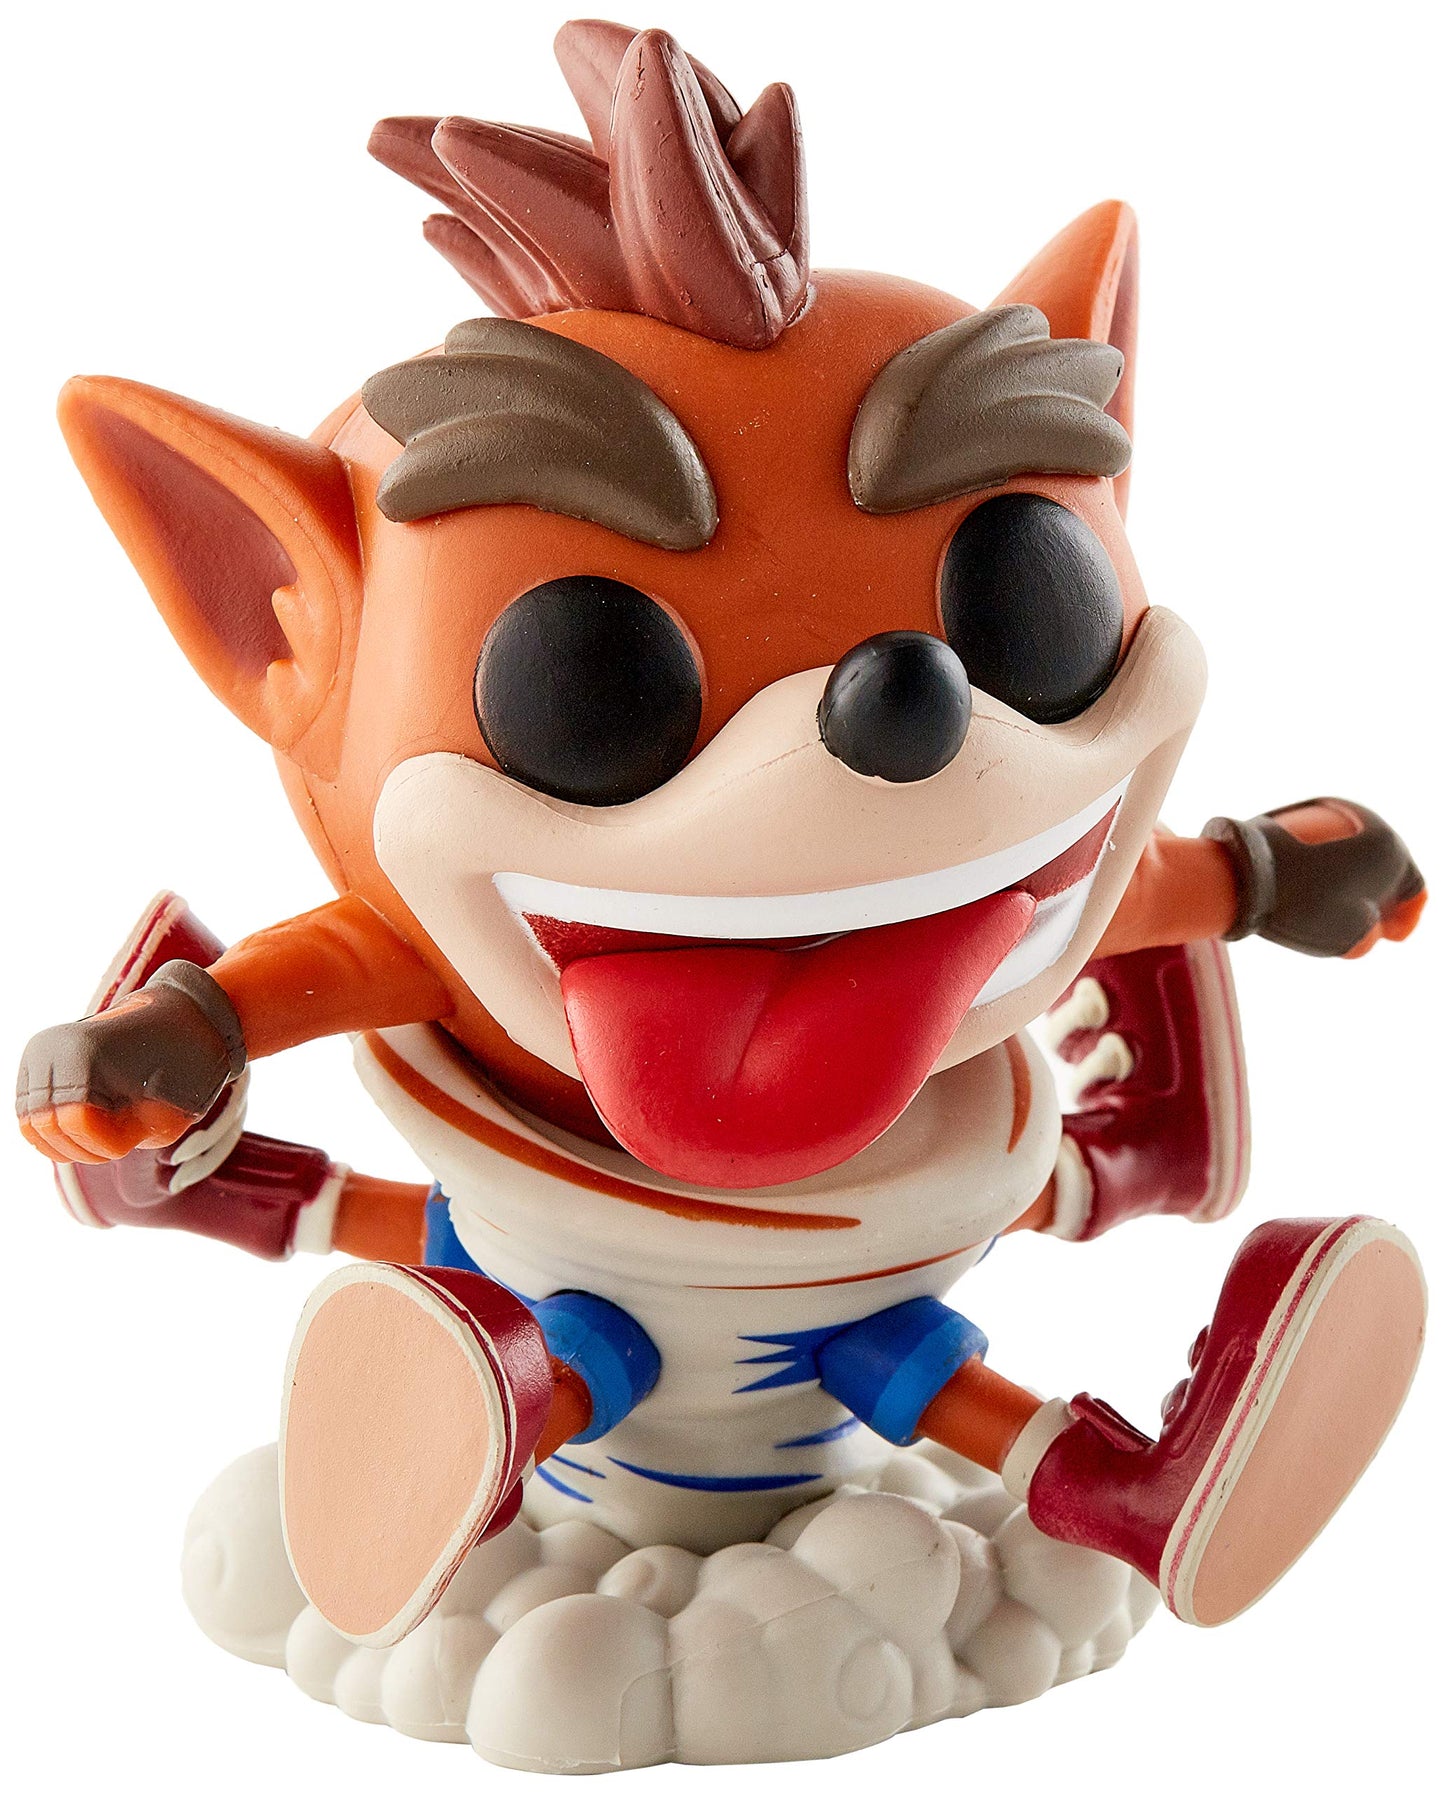 Funko POP! Games Crash Bandicoot - Crash Bandicoot #532 [Spinning]